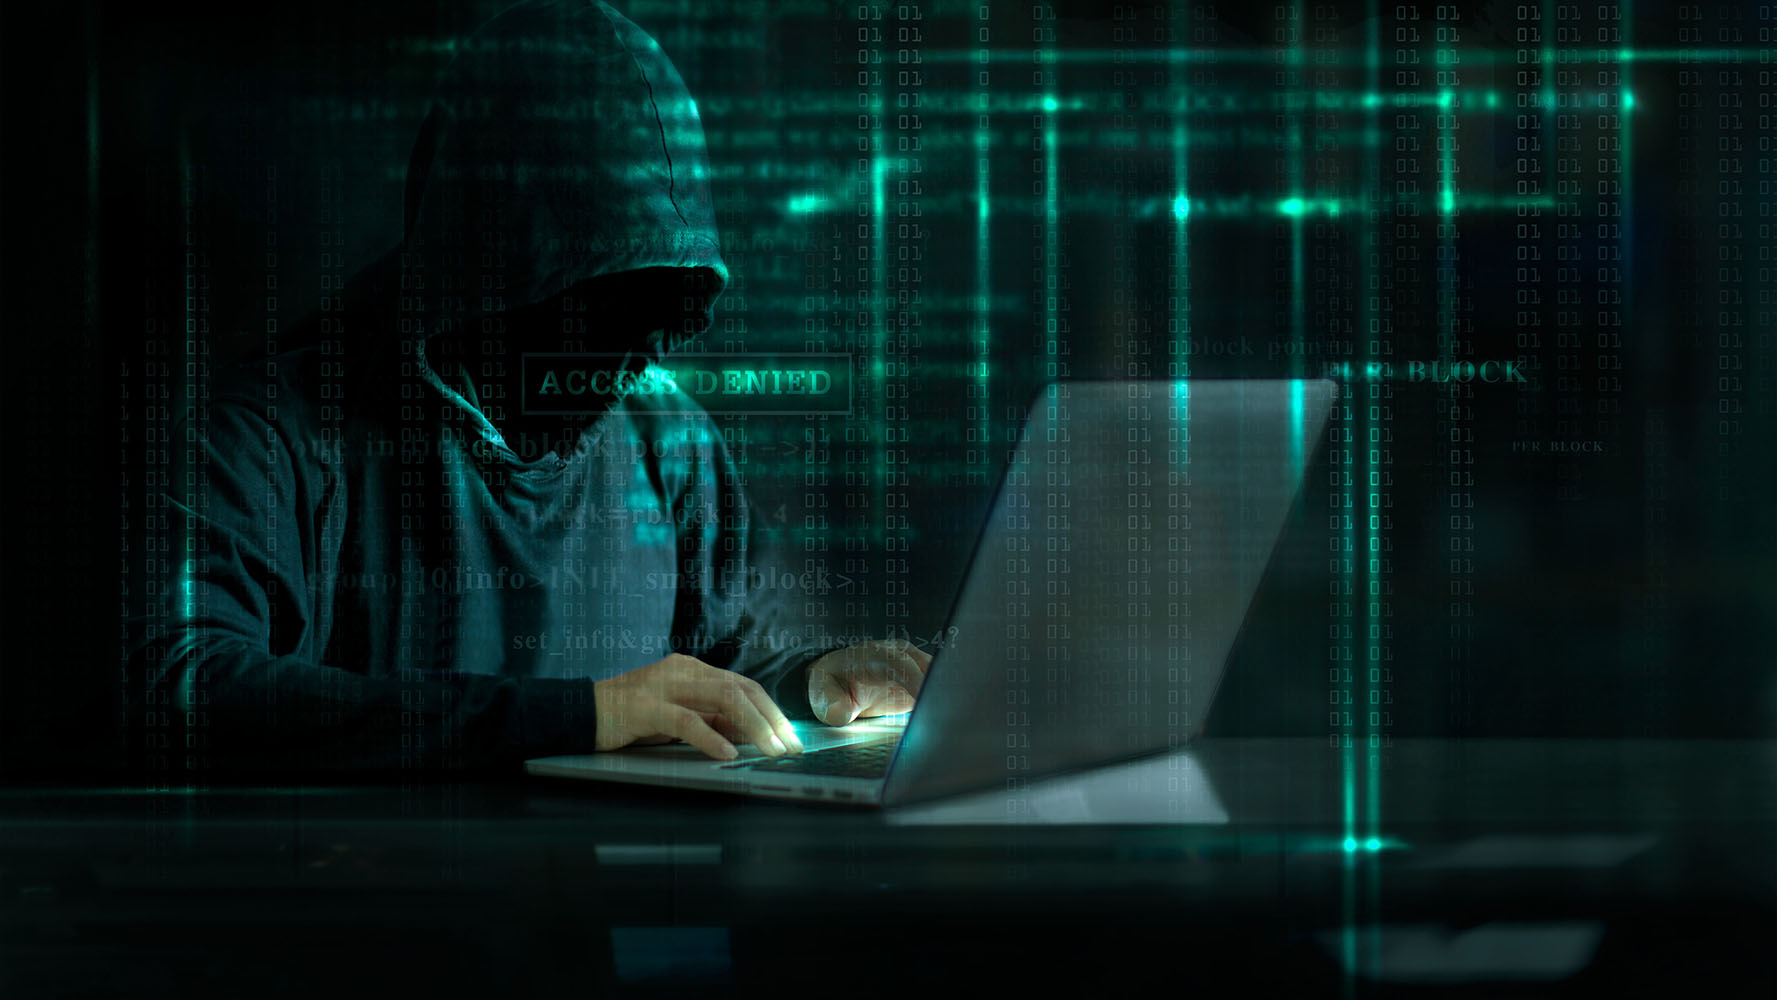 Broward County Public Schools Data Hacked by Cybercriminals